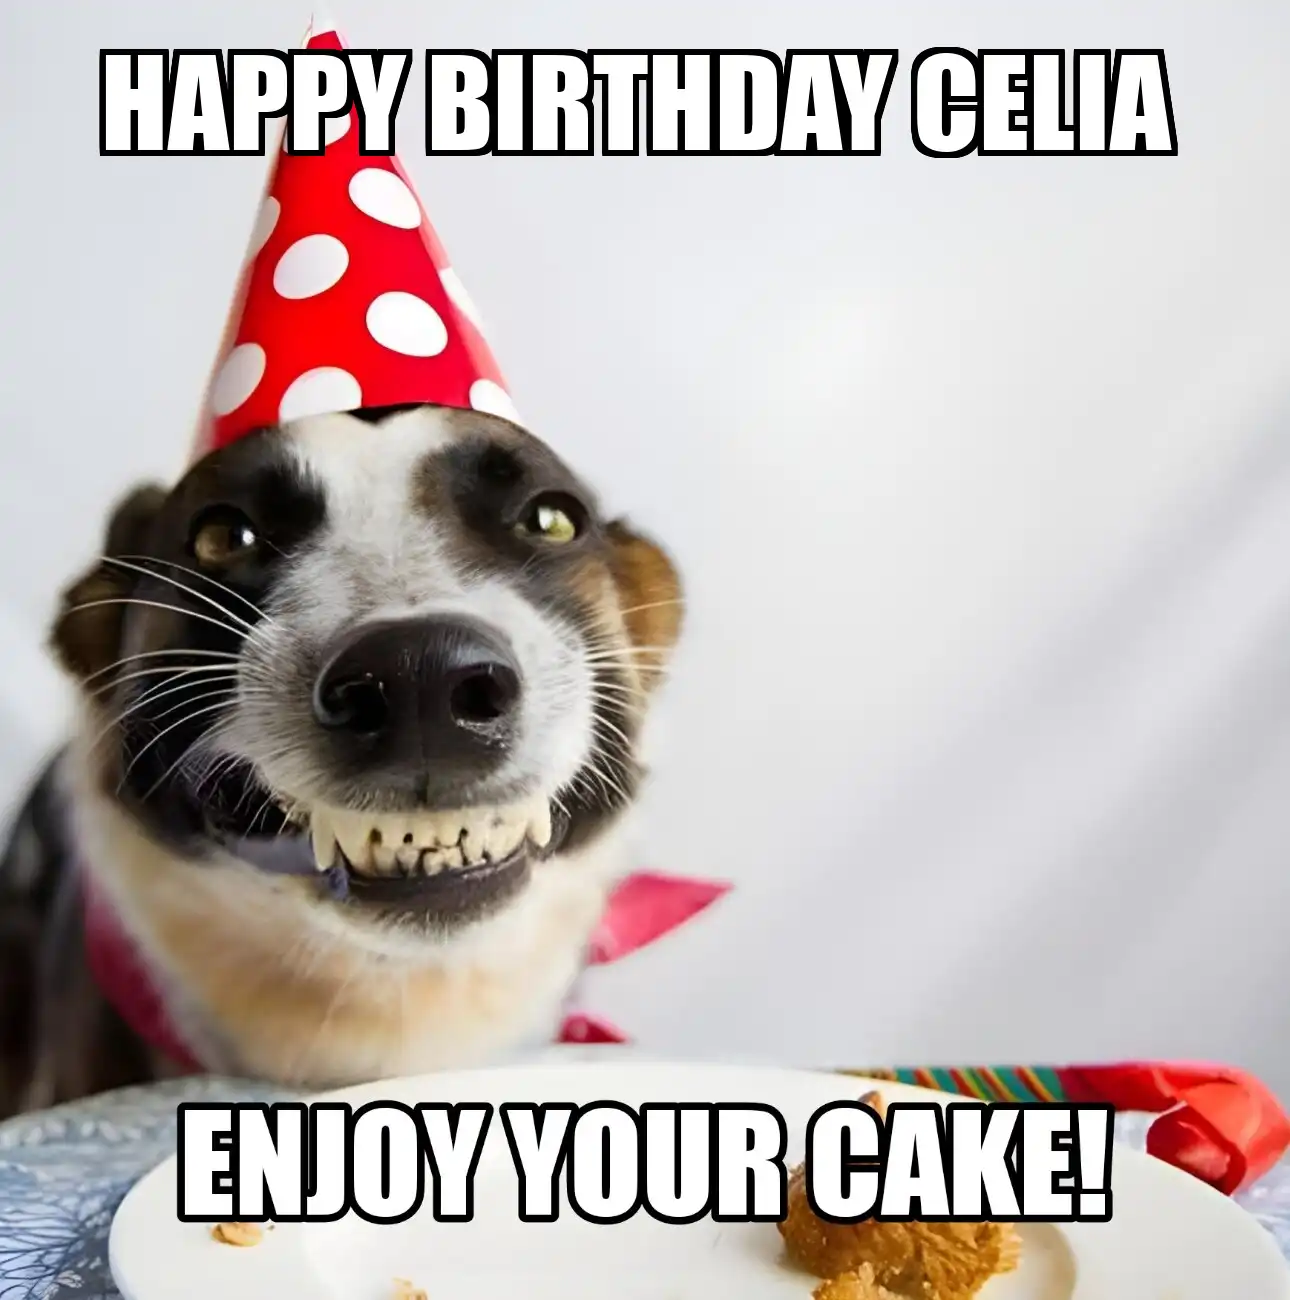 Happy Birthday Celia Enjoy Your Cake Dog Meme